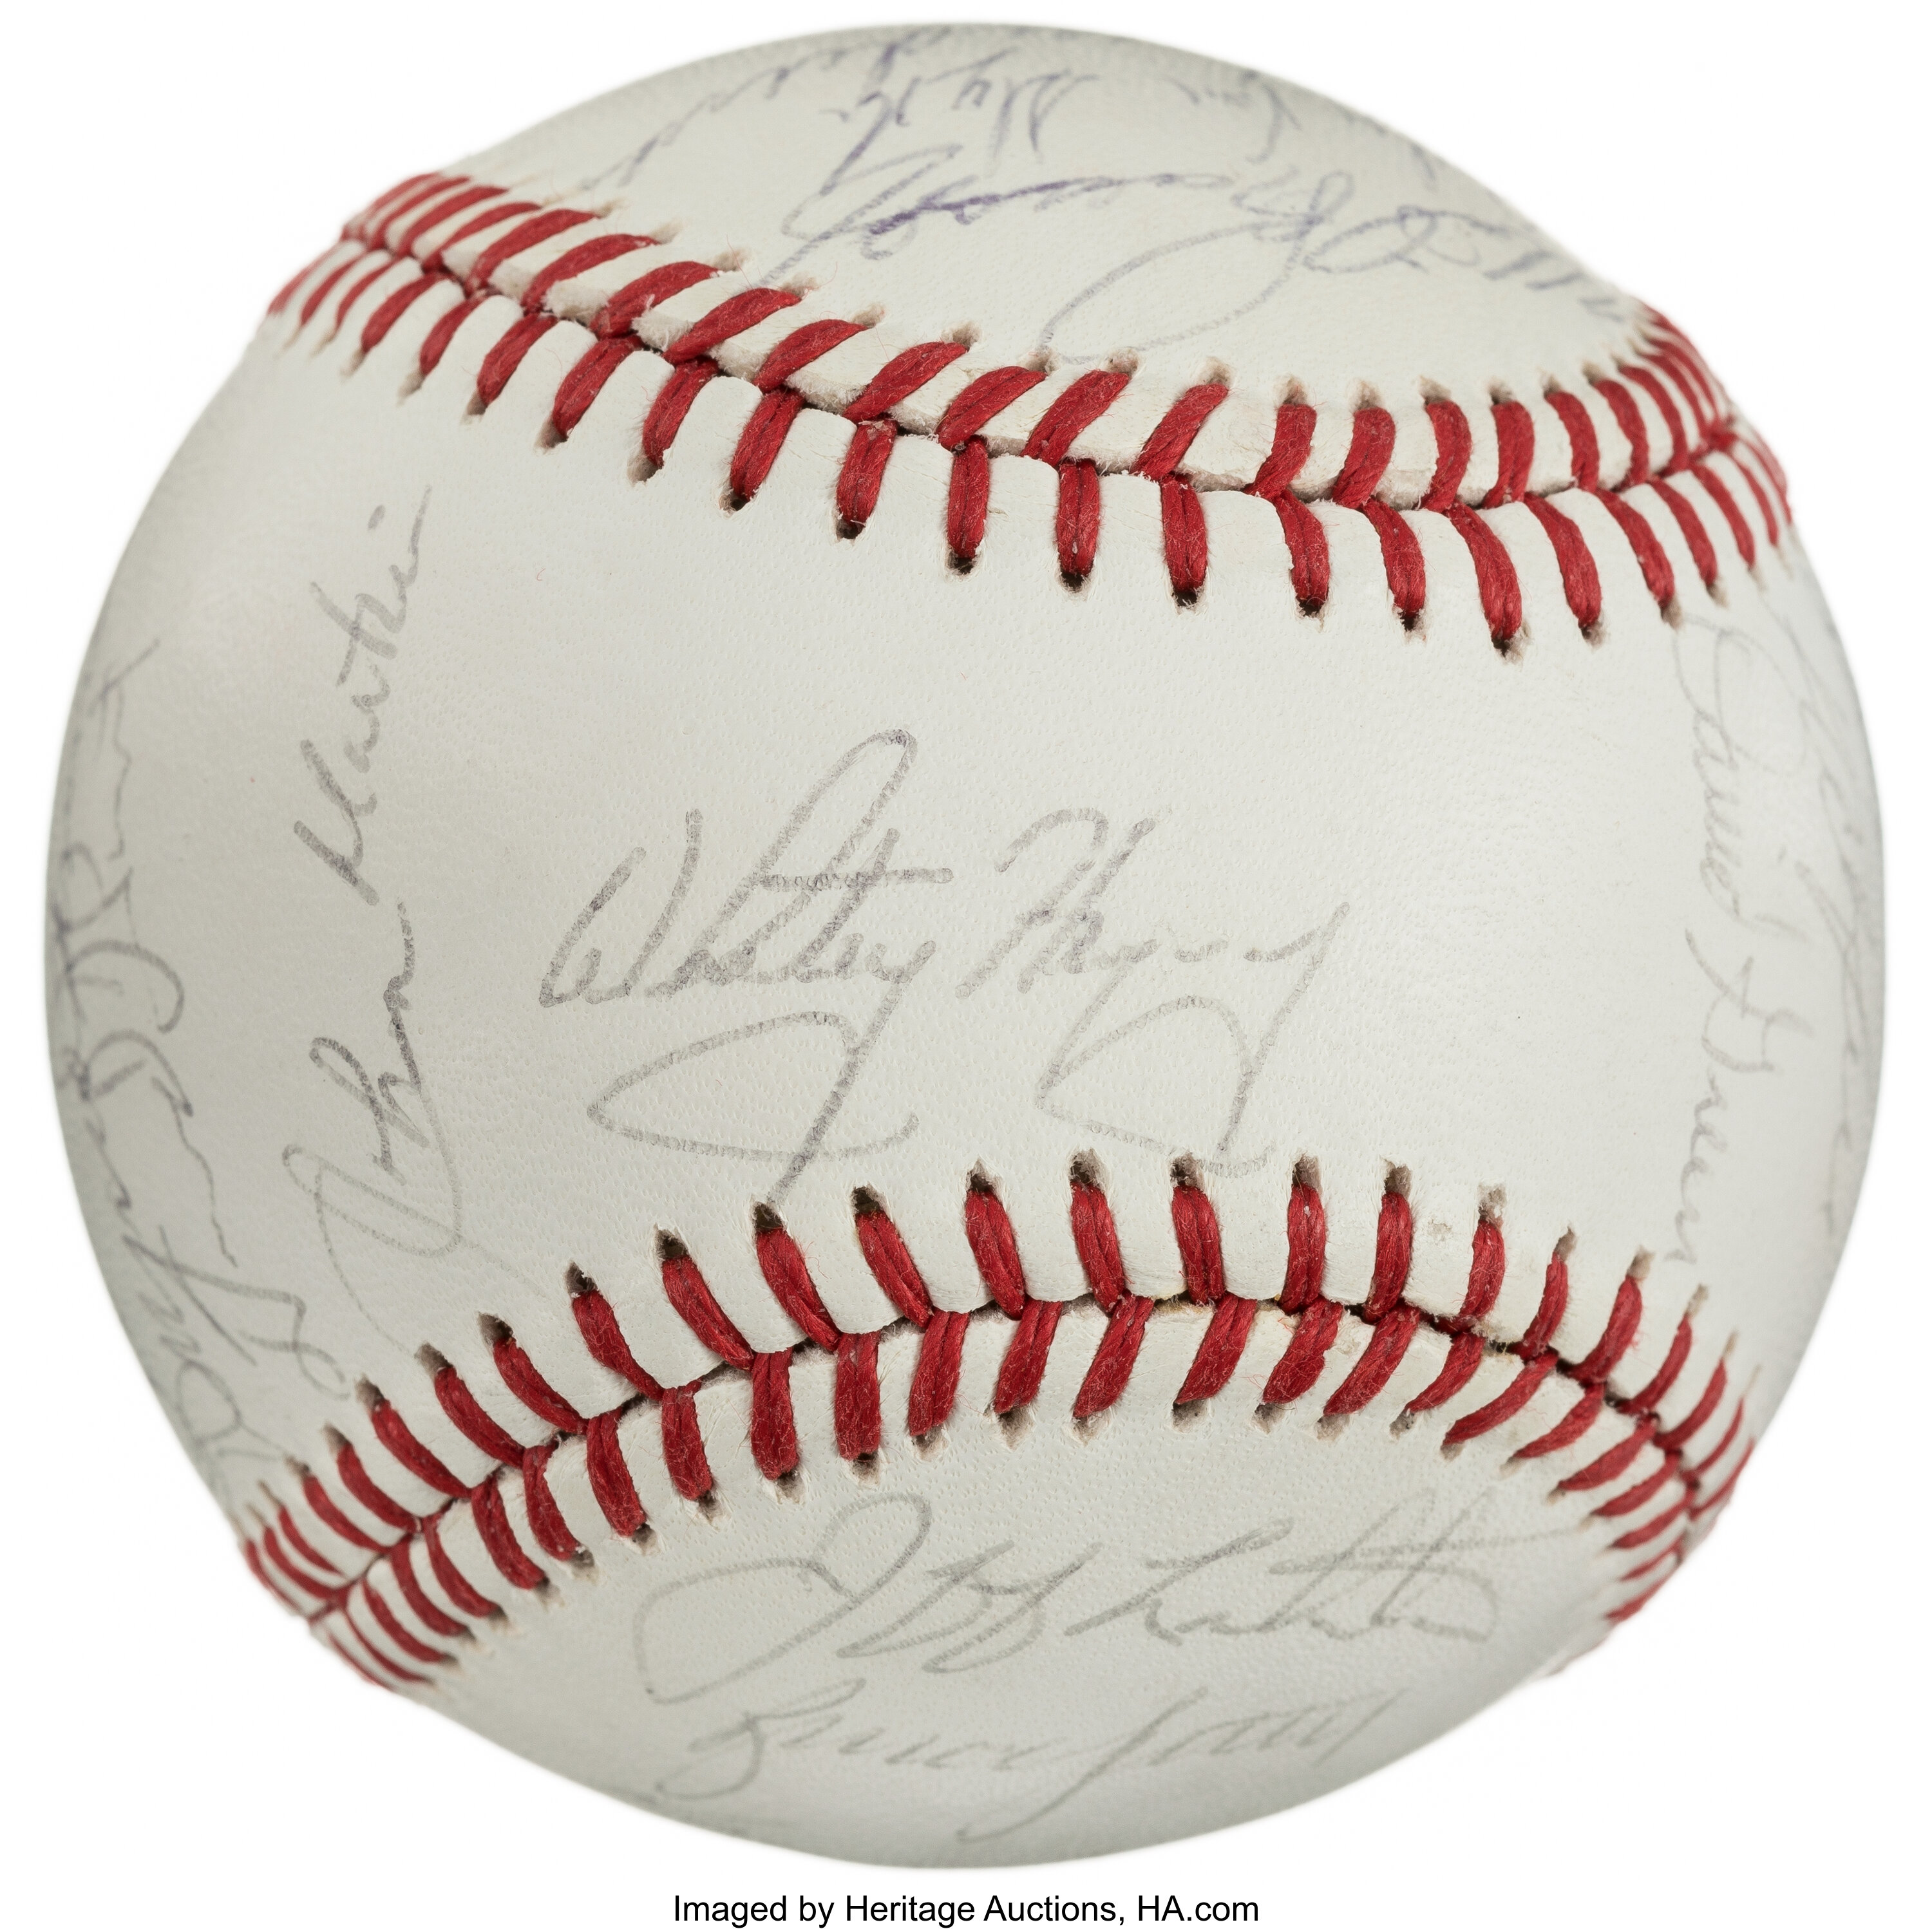 Andy Van Slyke autographed baseball card (St Louis Cardinals